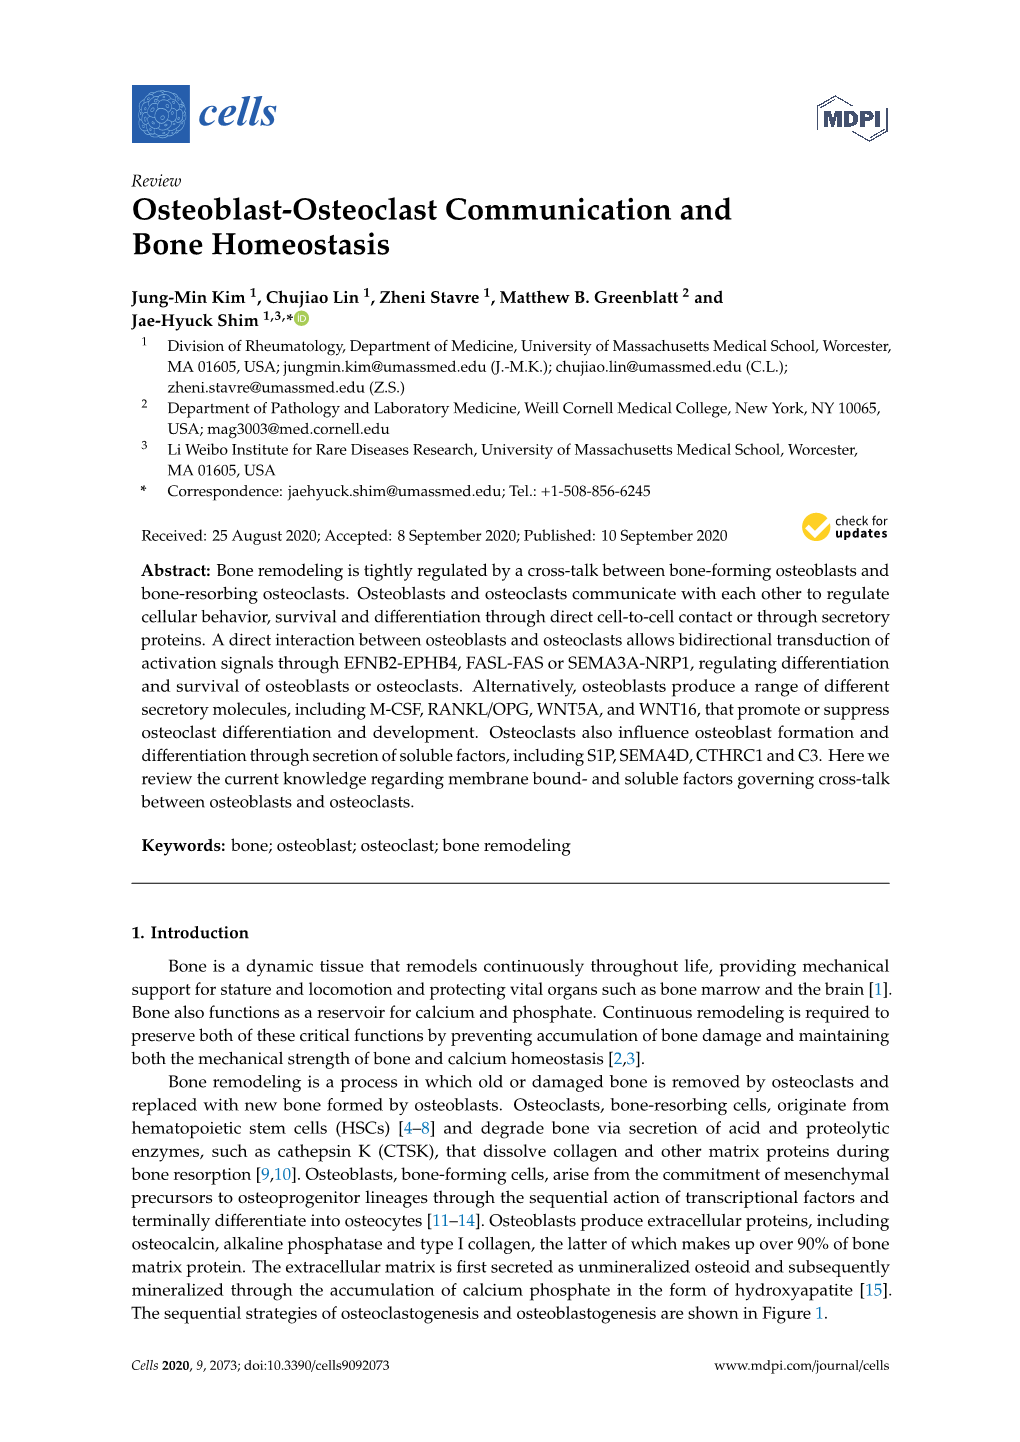 Osteoblast-Osteoclast Communication and Bone Homeostasis